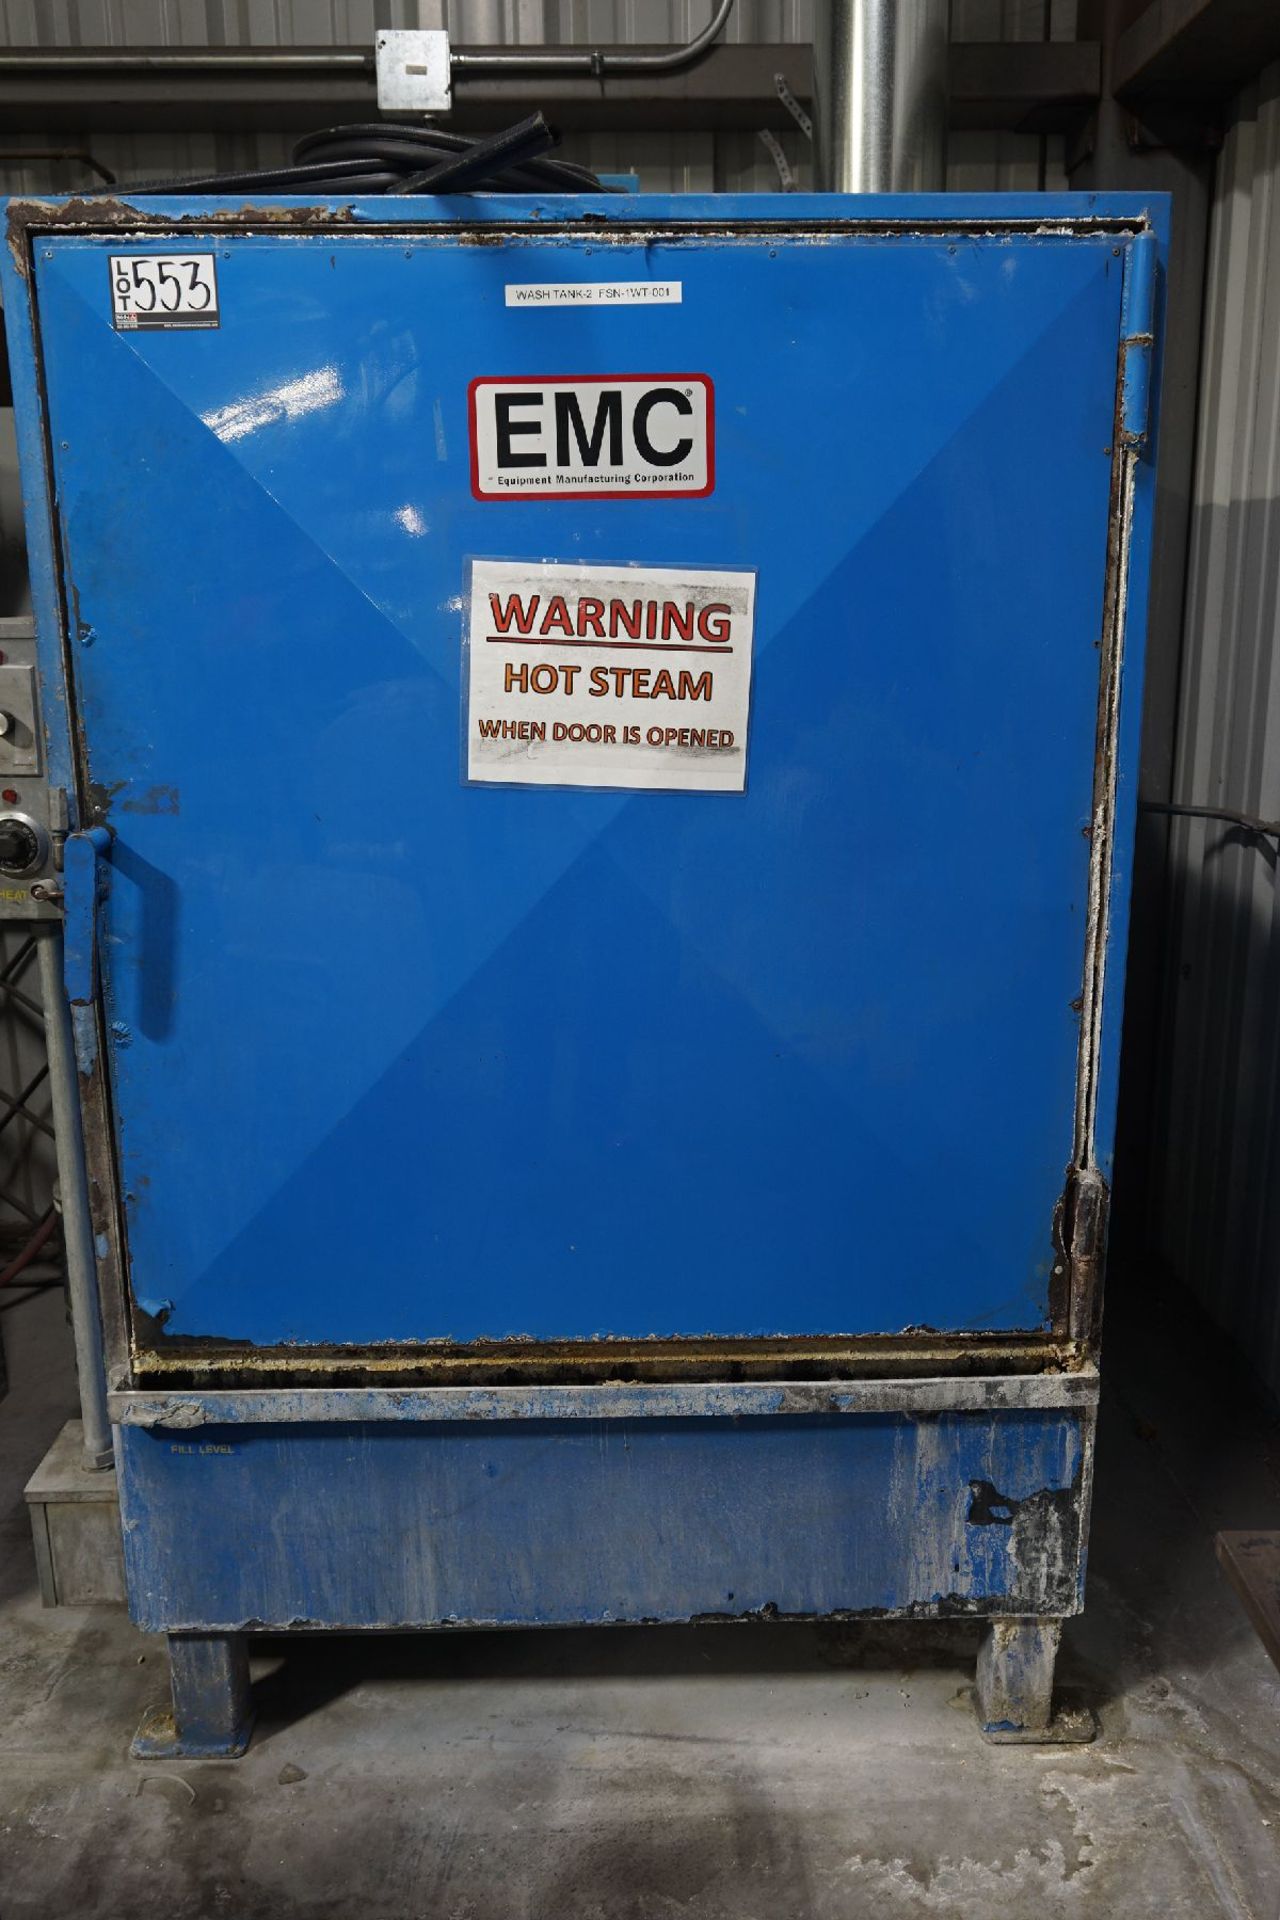 EMC Model 4046E Parts Washer